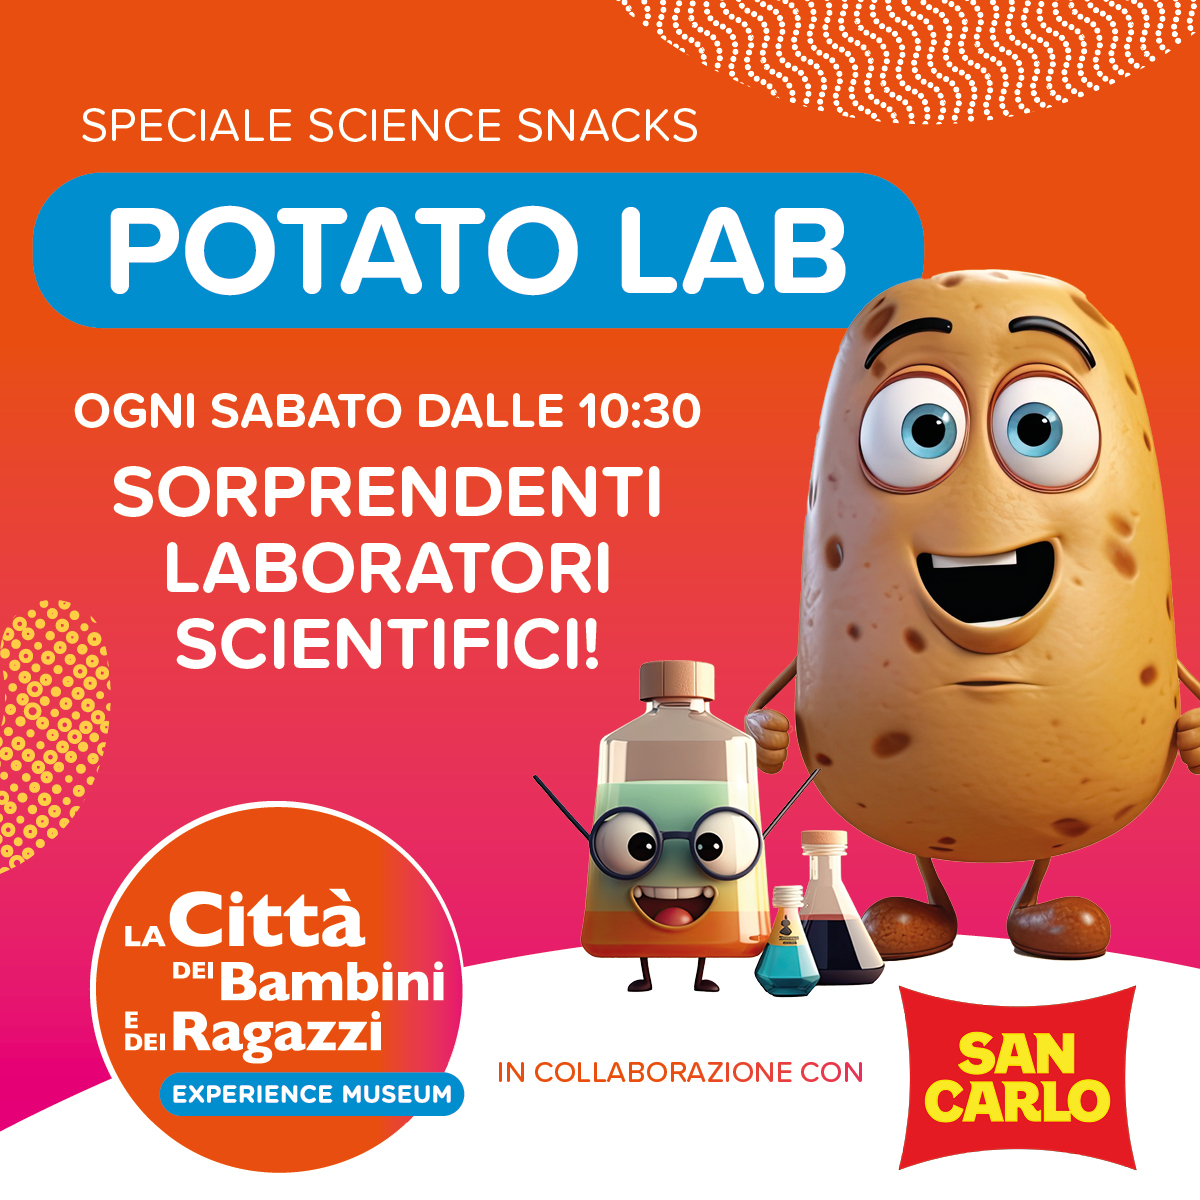 Speciale Science Snack - POTATO LAB